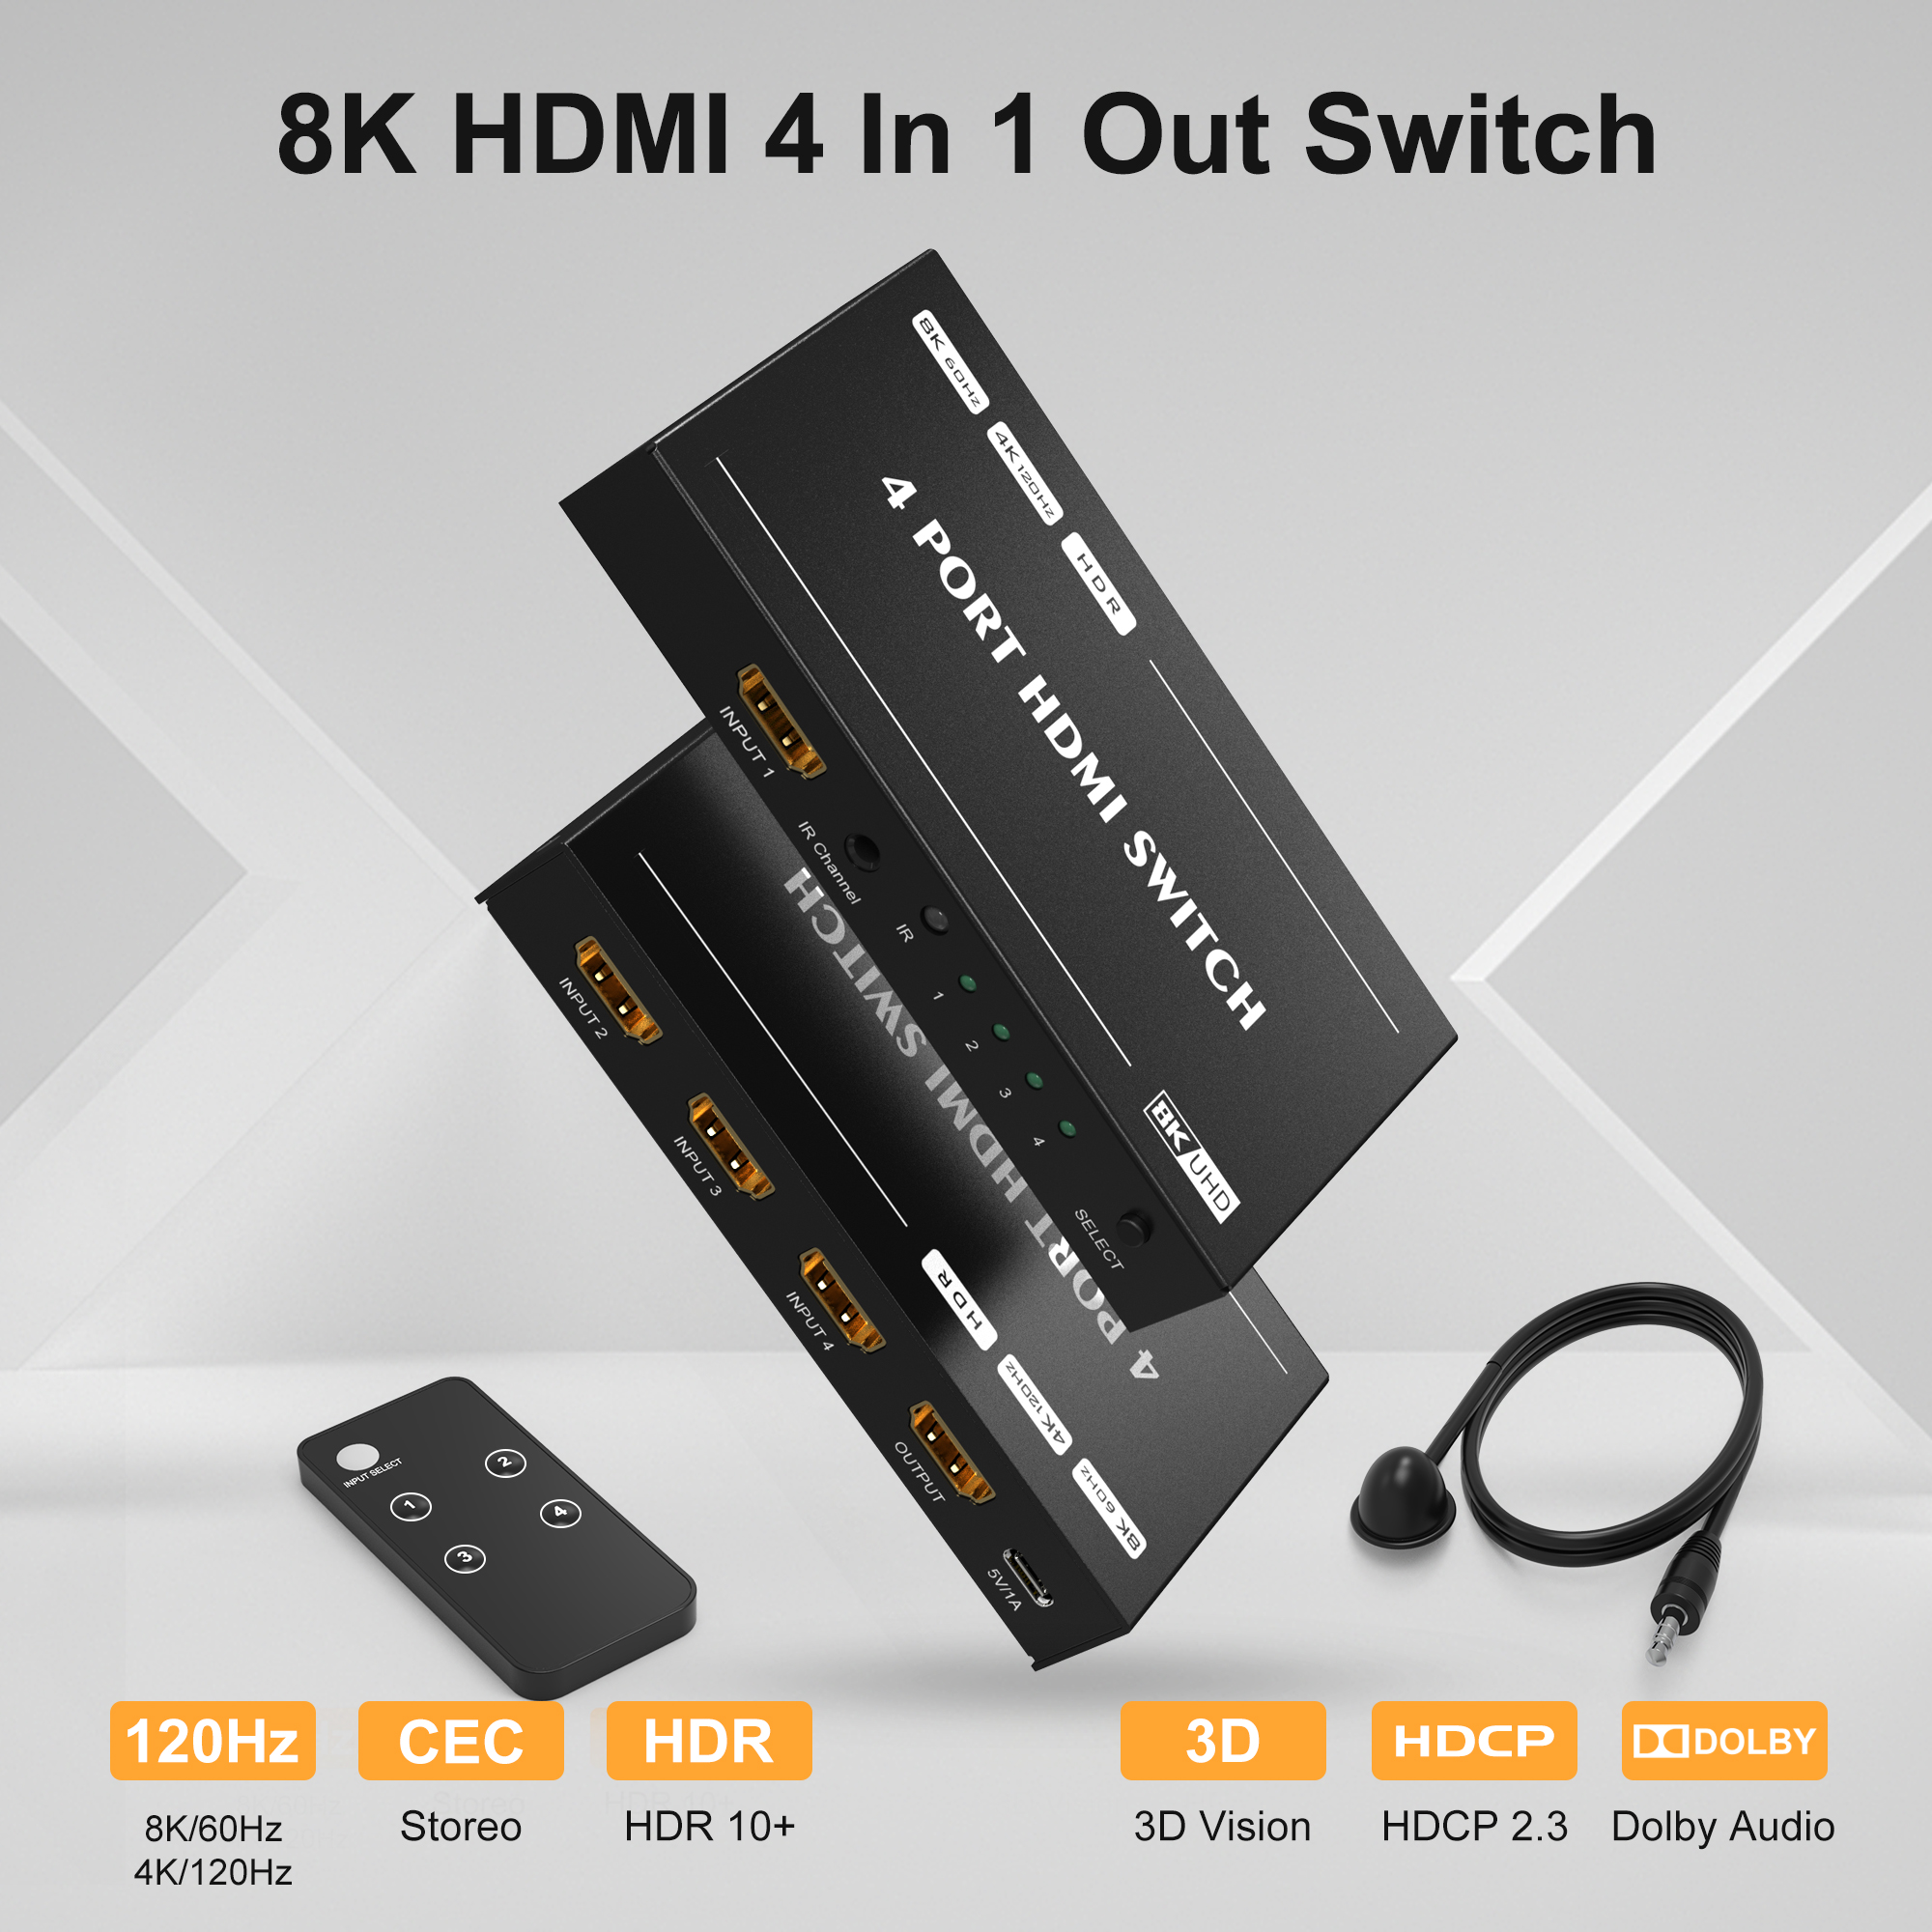 HDMI 2.1 8K HDMI Cable 8K@60Hz 4K@120Hz HDMI Splitter HDMI Switch